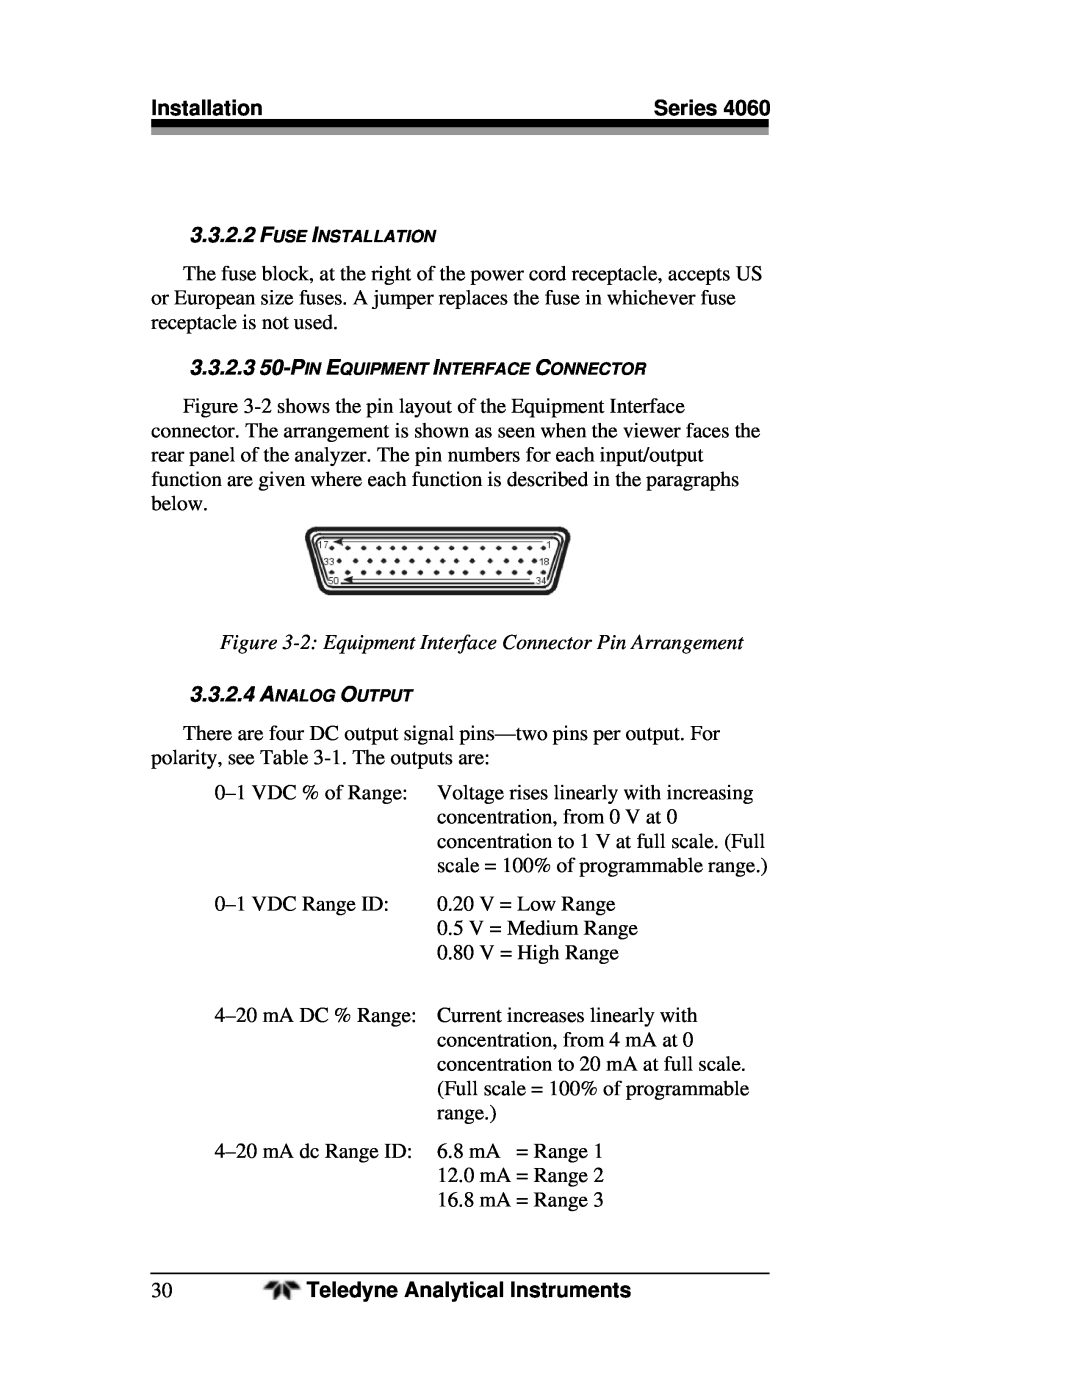 Teledyne 4060 manual 2 Equipment Interface Connector Pin Arrangement, VDC % of Range 